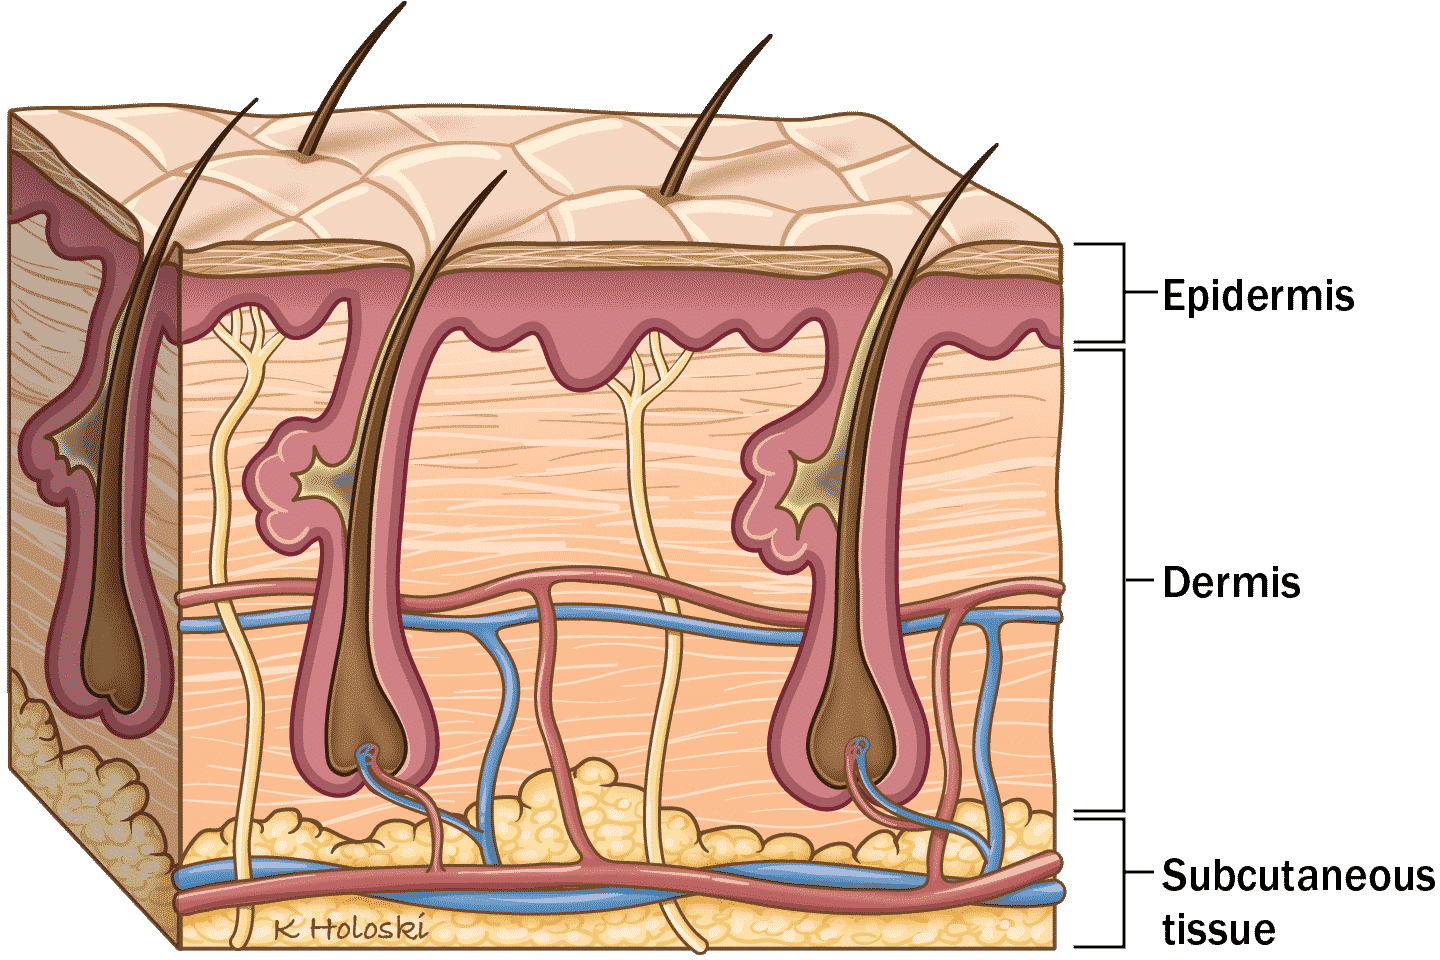 skin anatomy